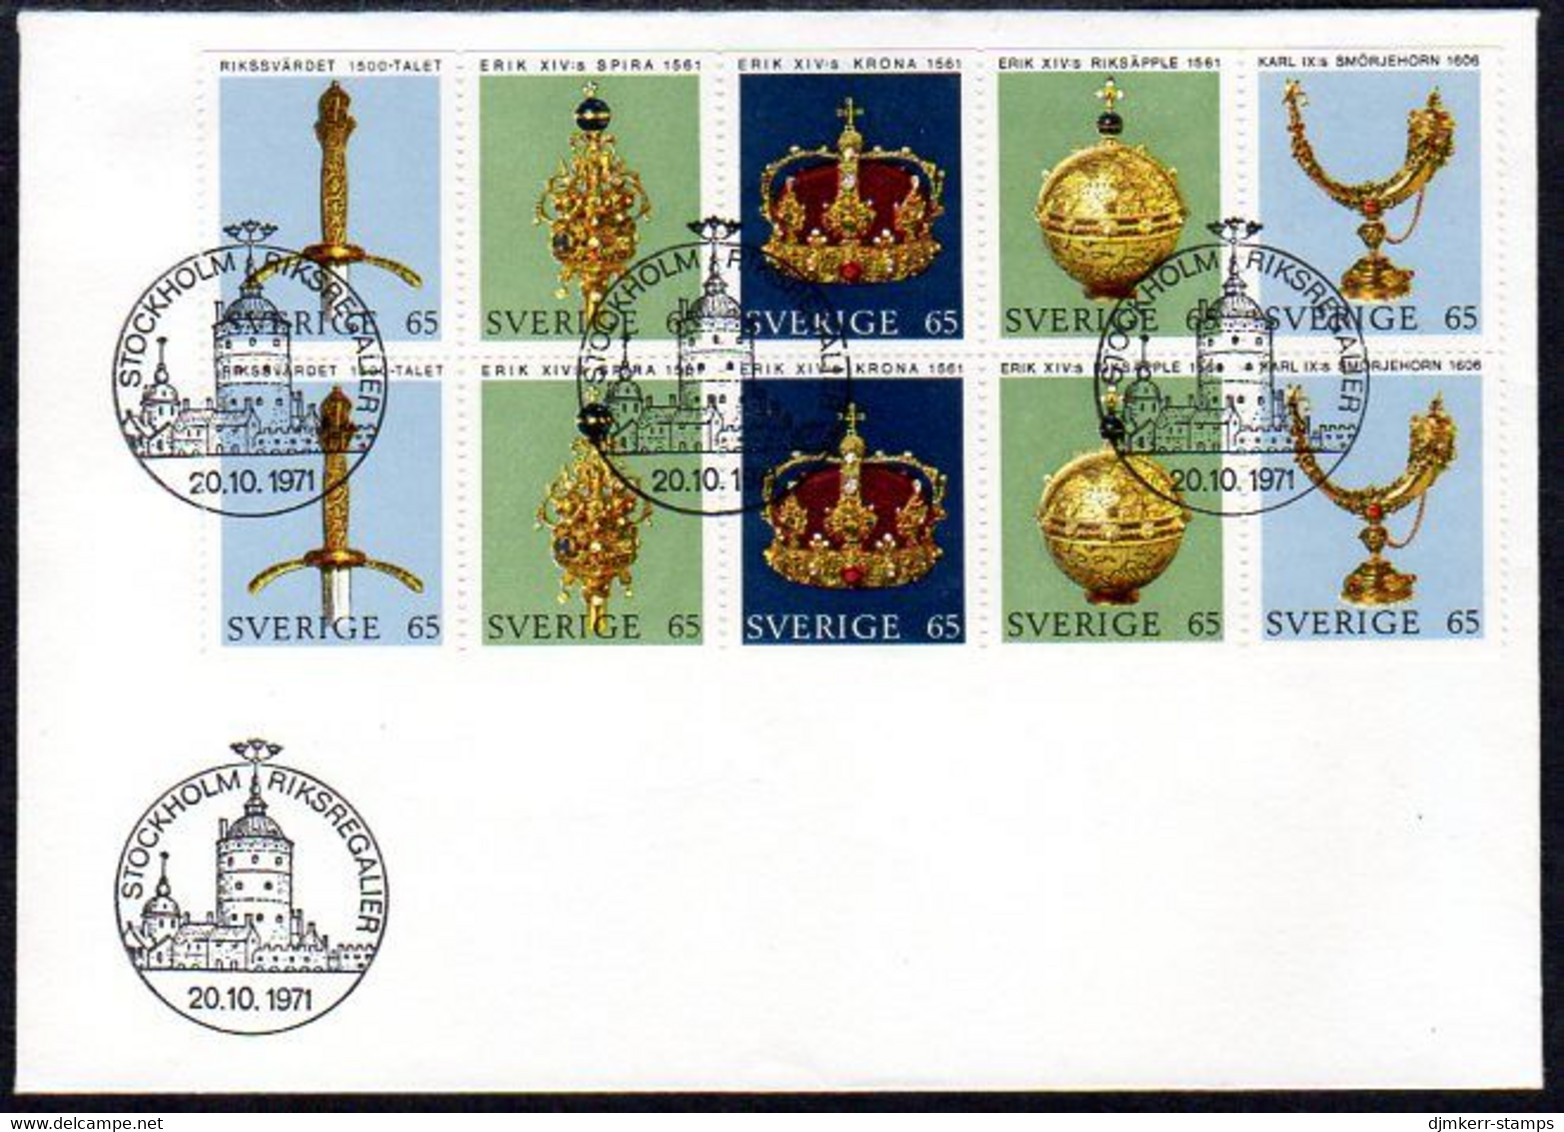 SWEDEN 1971 Crown Jewels FDC.  Michel 723-27 - FDC